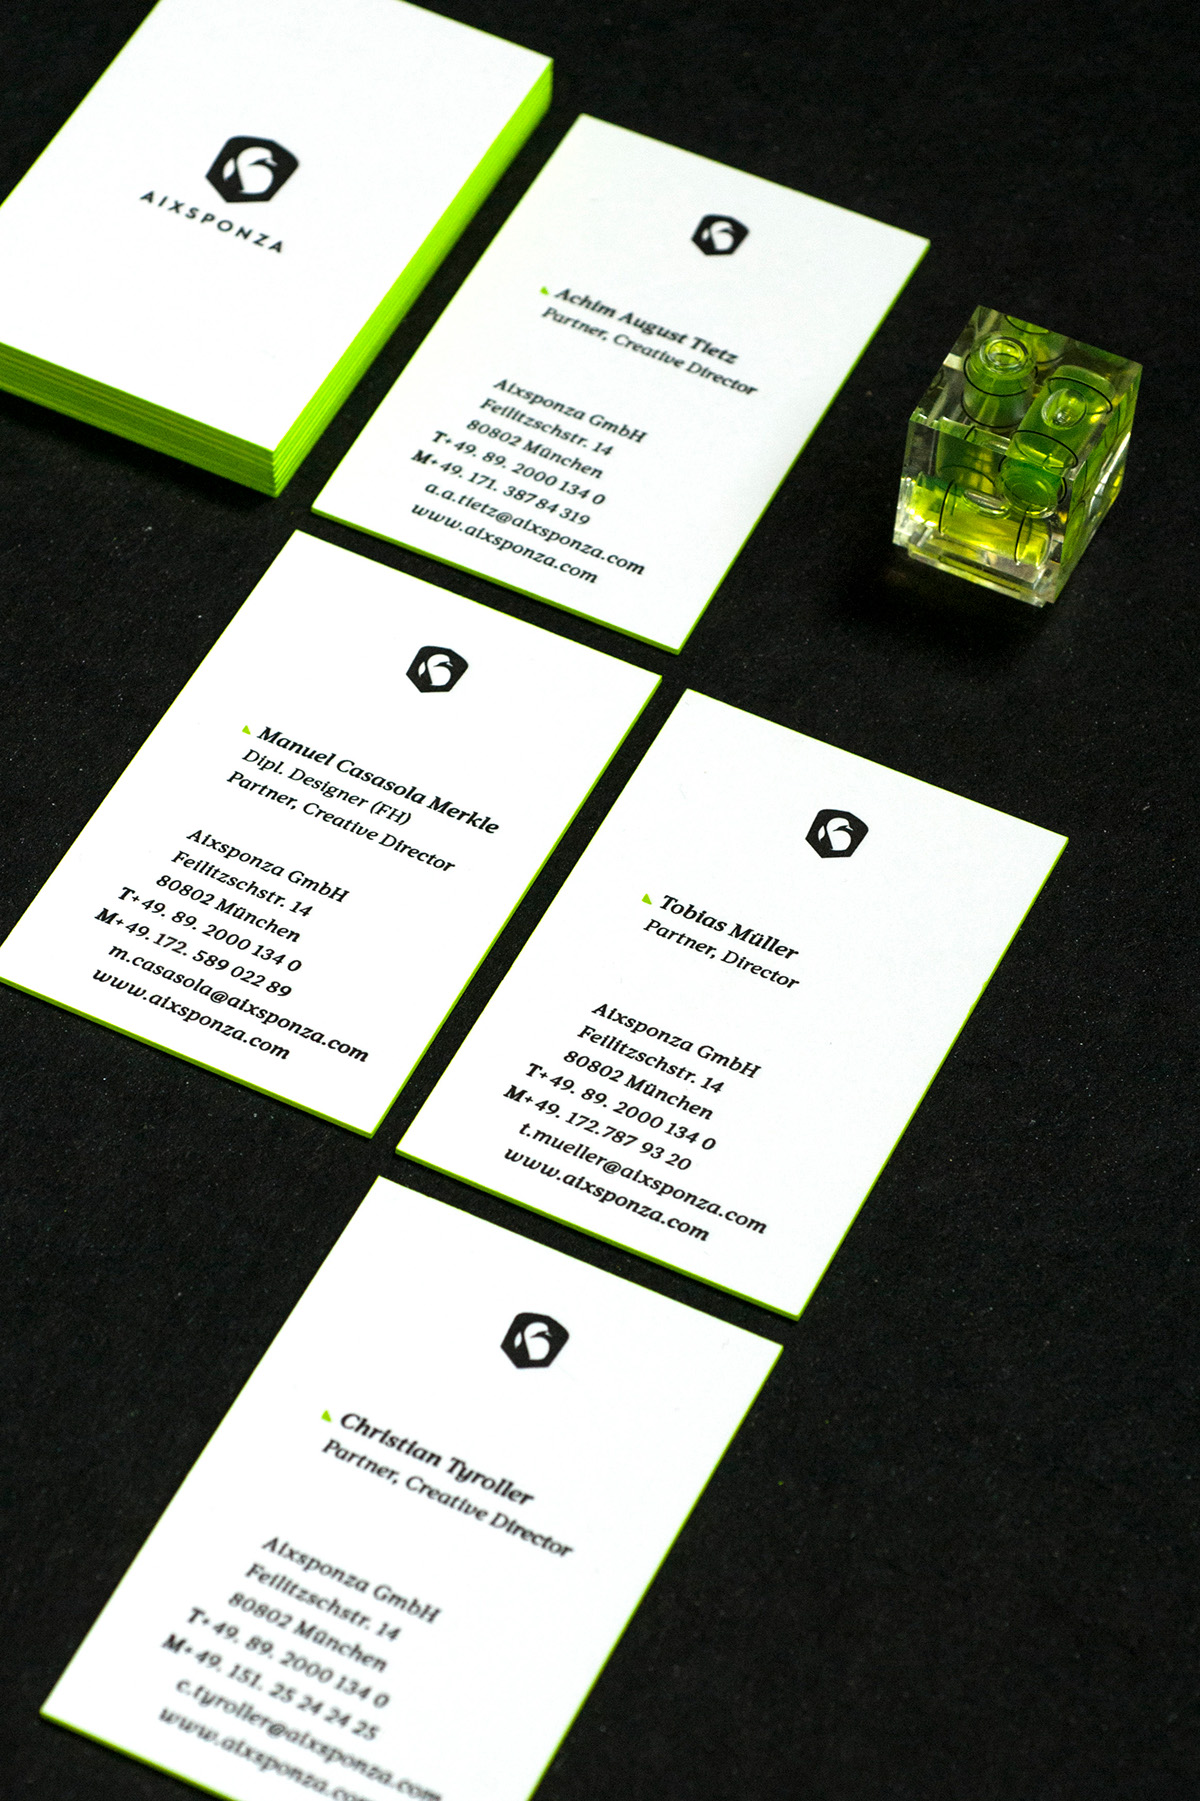 aixsponza Corporate Identety Corporate Design letterhead envelope business card seal duck letterpress munich